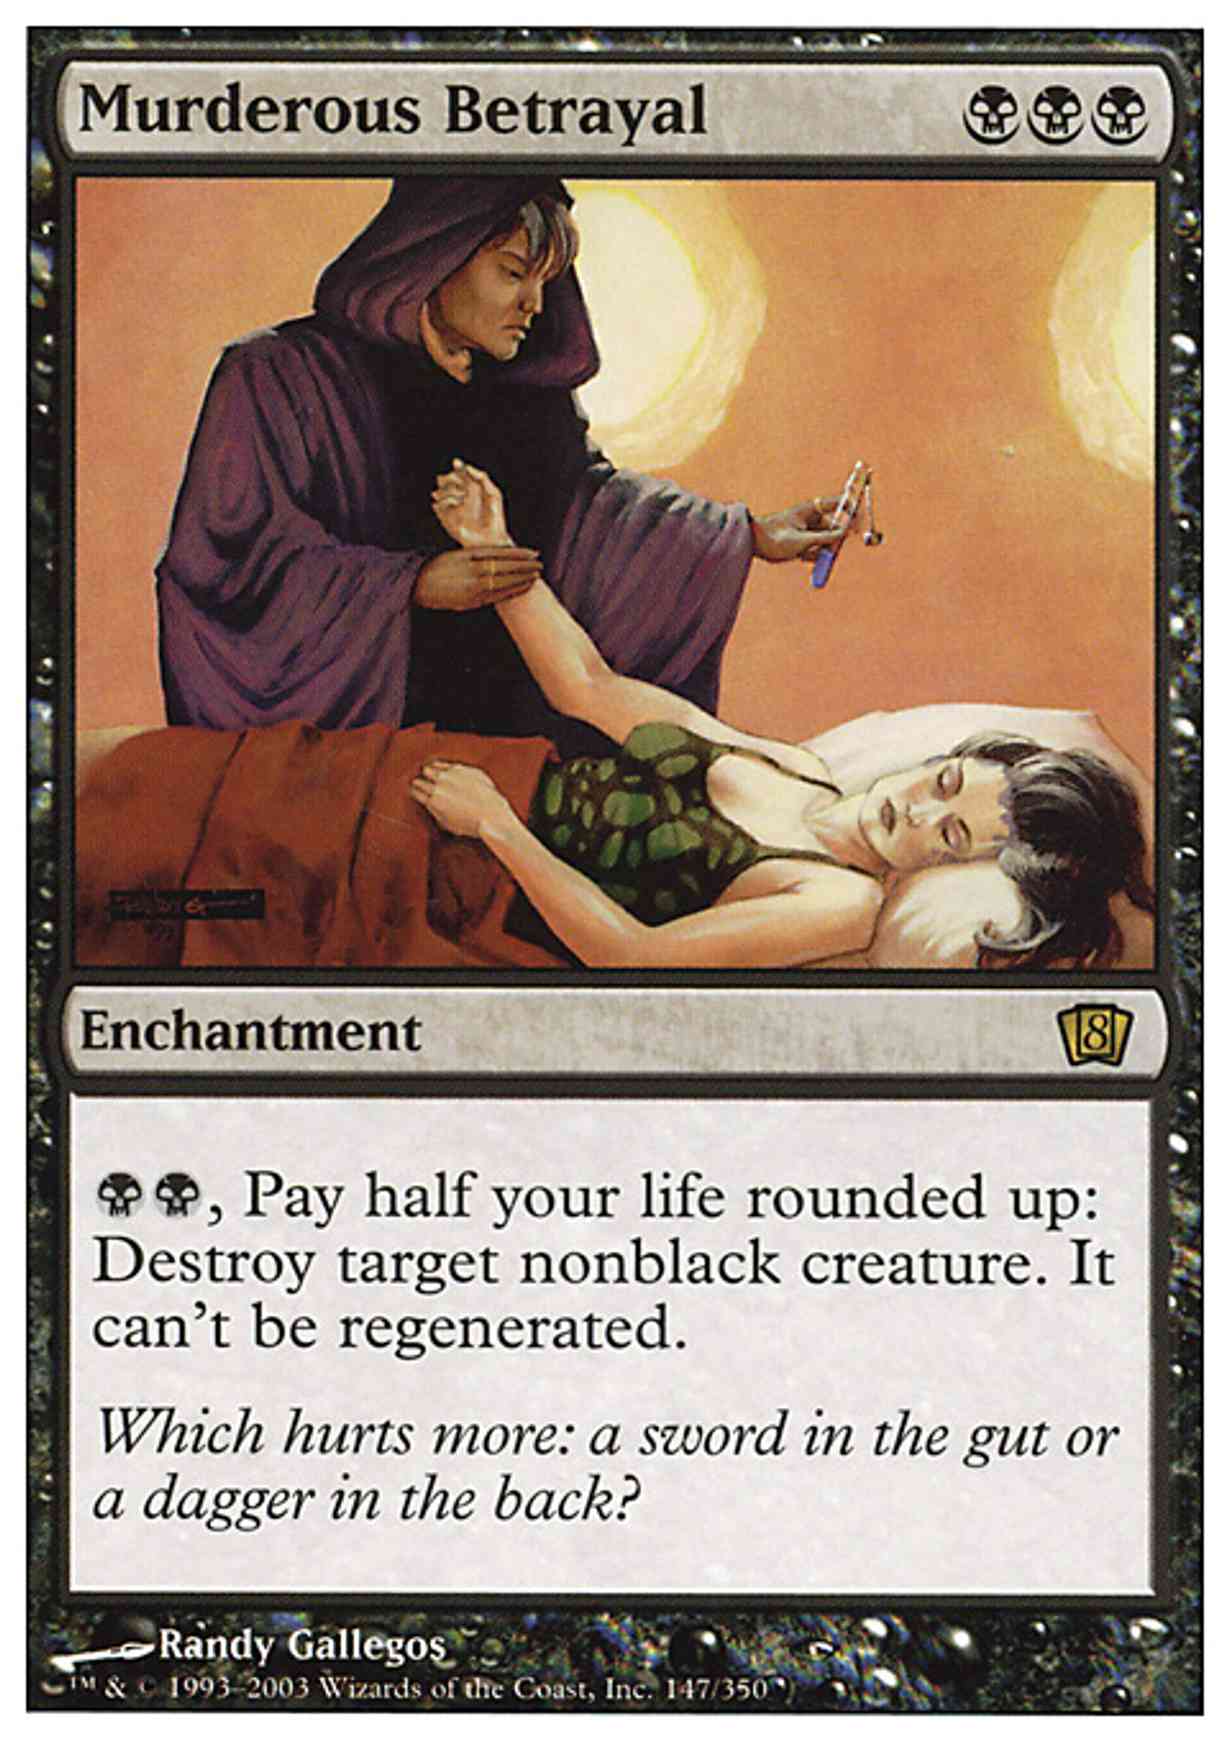 Murderous Betrayal magic card front